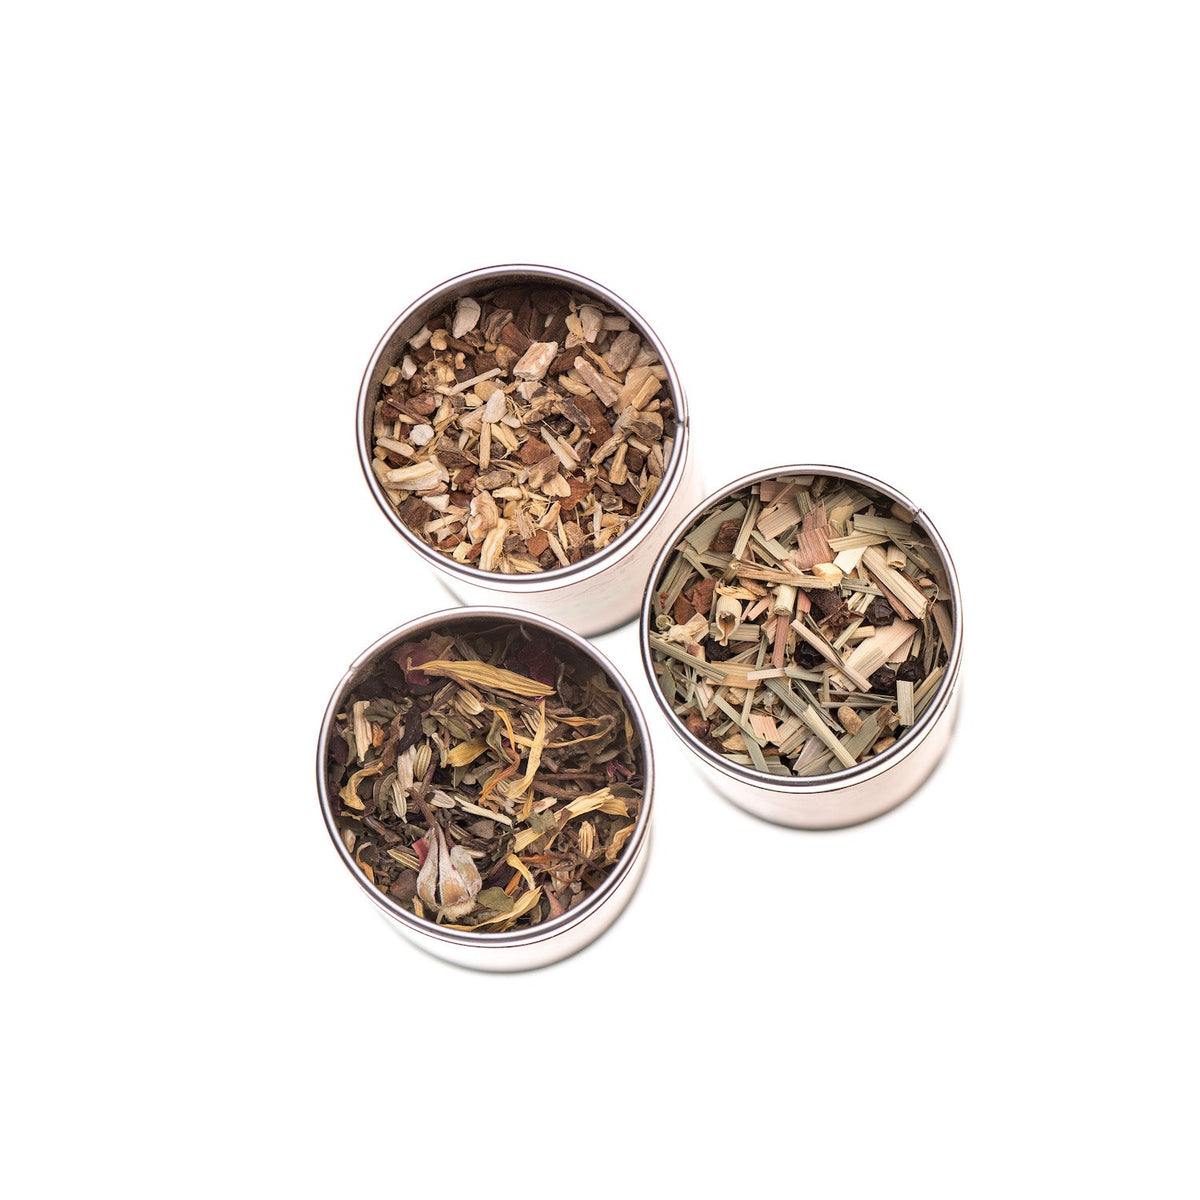 * Paavani Ayurveda - The Herbal Tea Ritual, Ayurvedic Organic Herbal Tea Blends-2